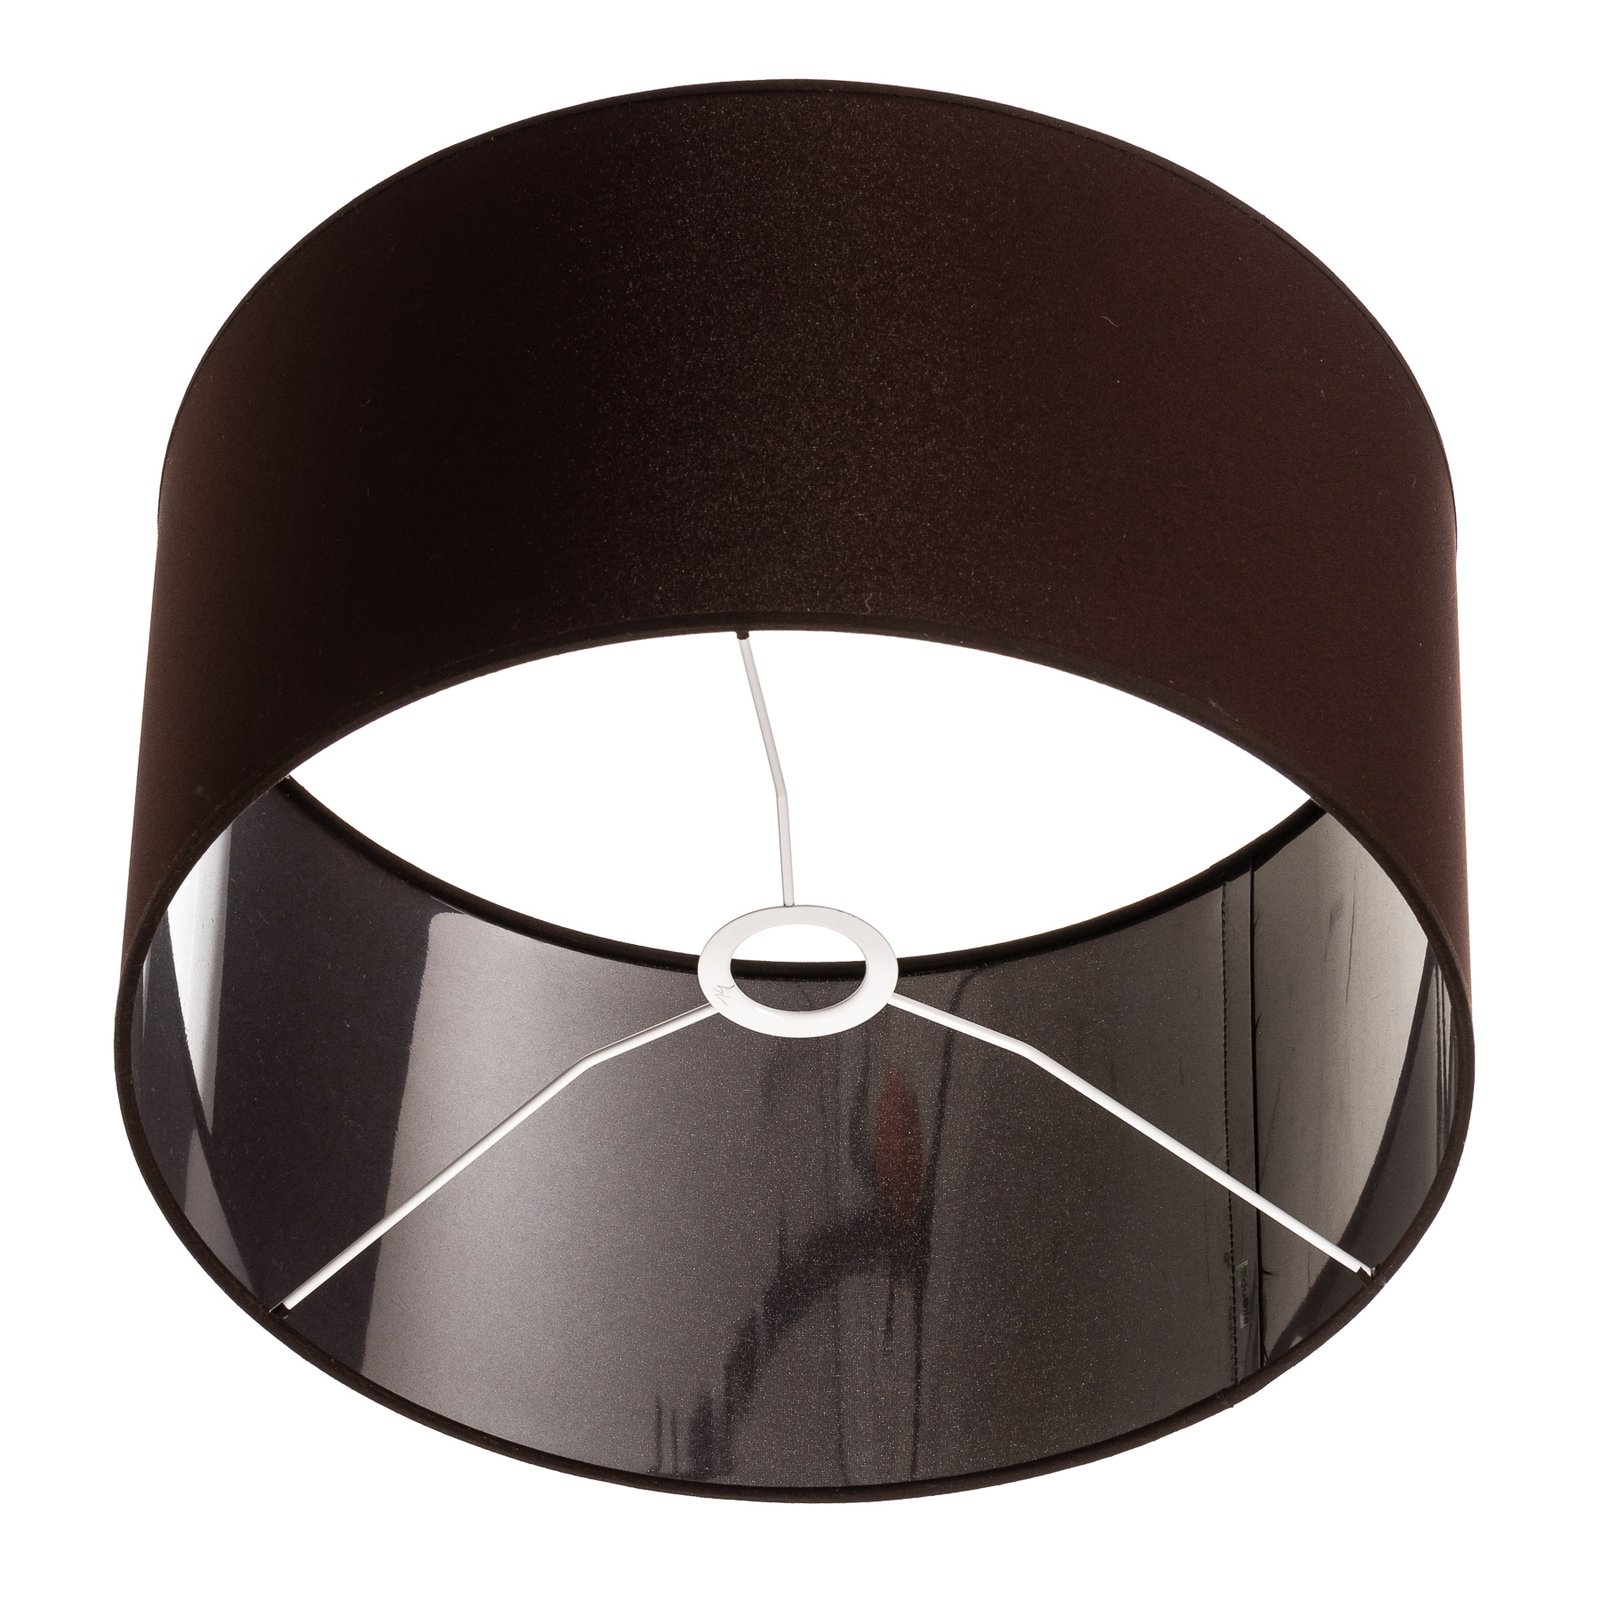 Roller lampshade dark brown Ø 40 cm height 22 cm